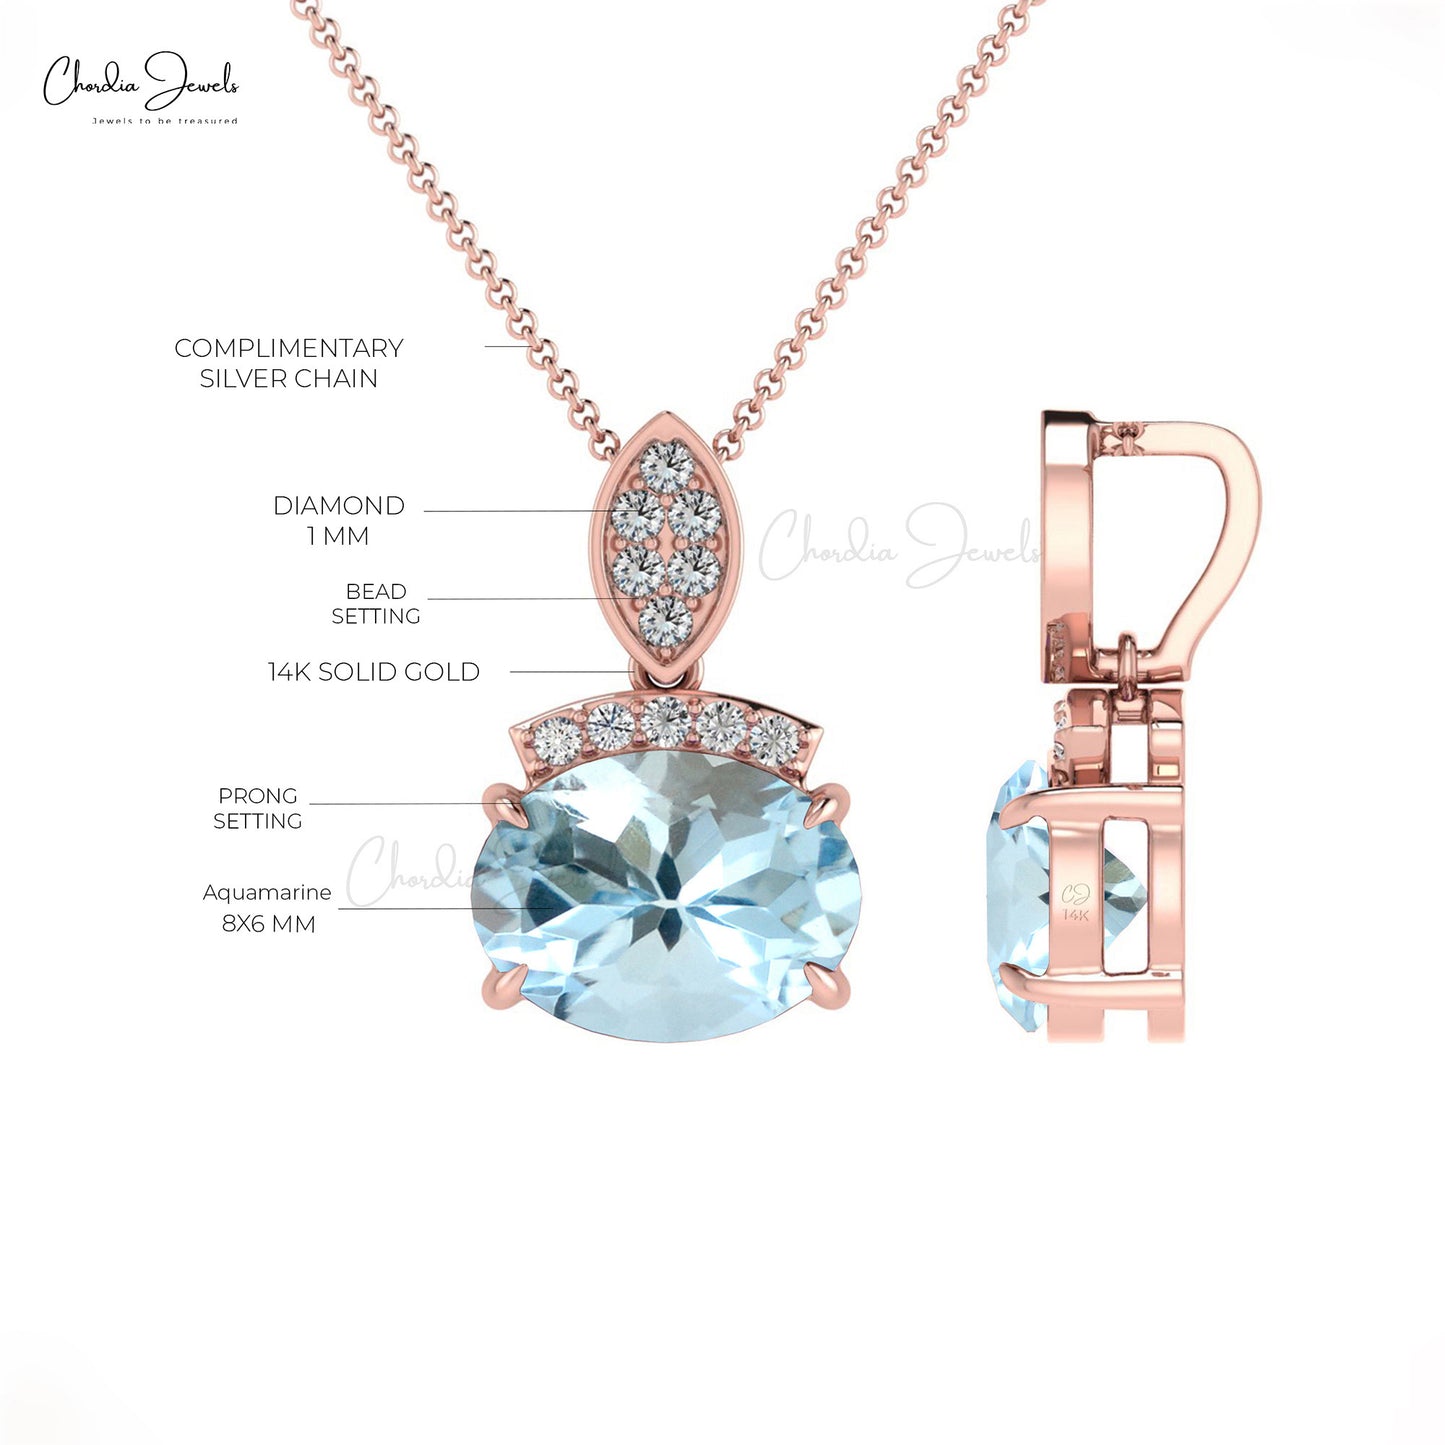 March Birthstone Aquamarine Diamond Dainty Pendant in 14K Gold